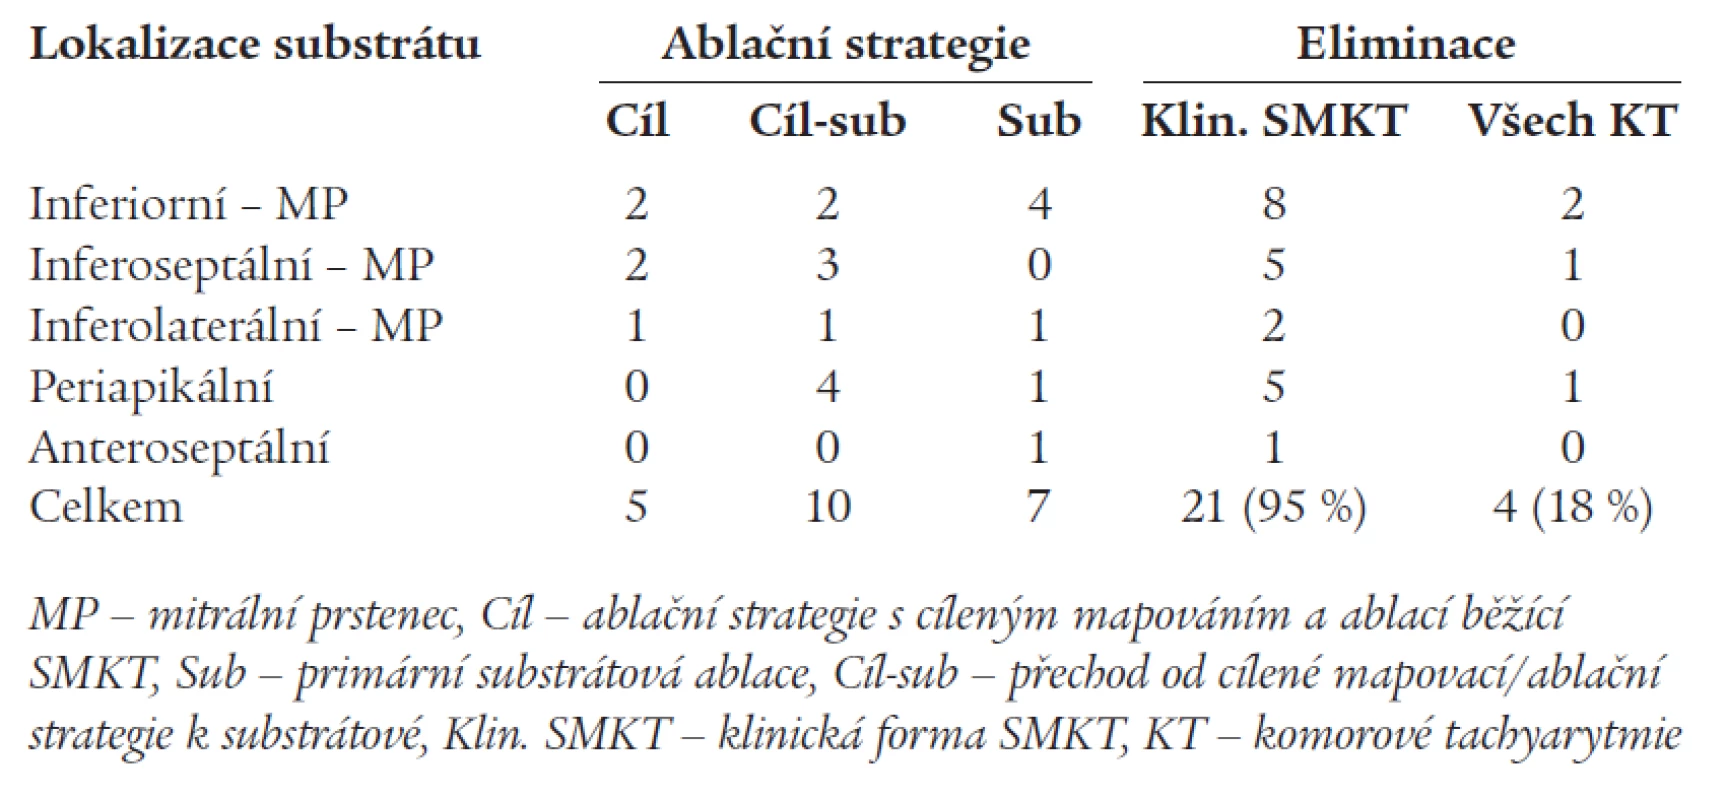 Lokalizace arytmogenního substrátu u pacientů s reentry SMKT po infarktu myokardu.